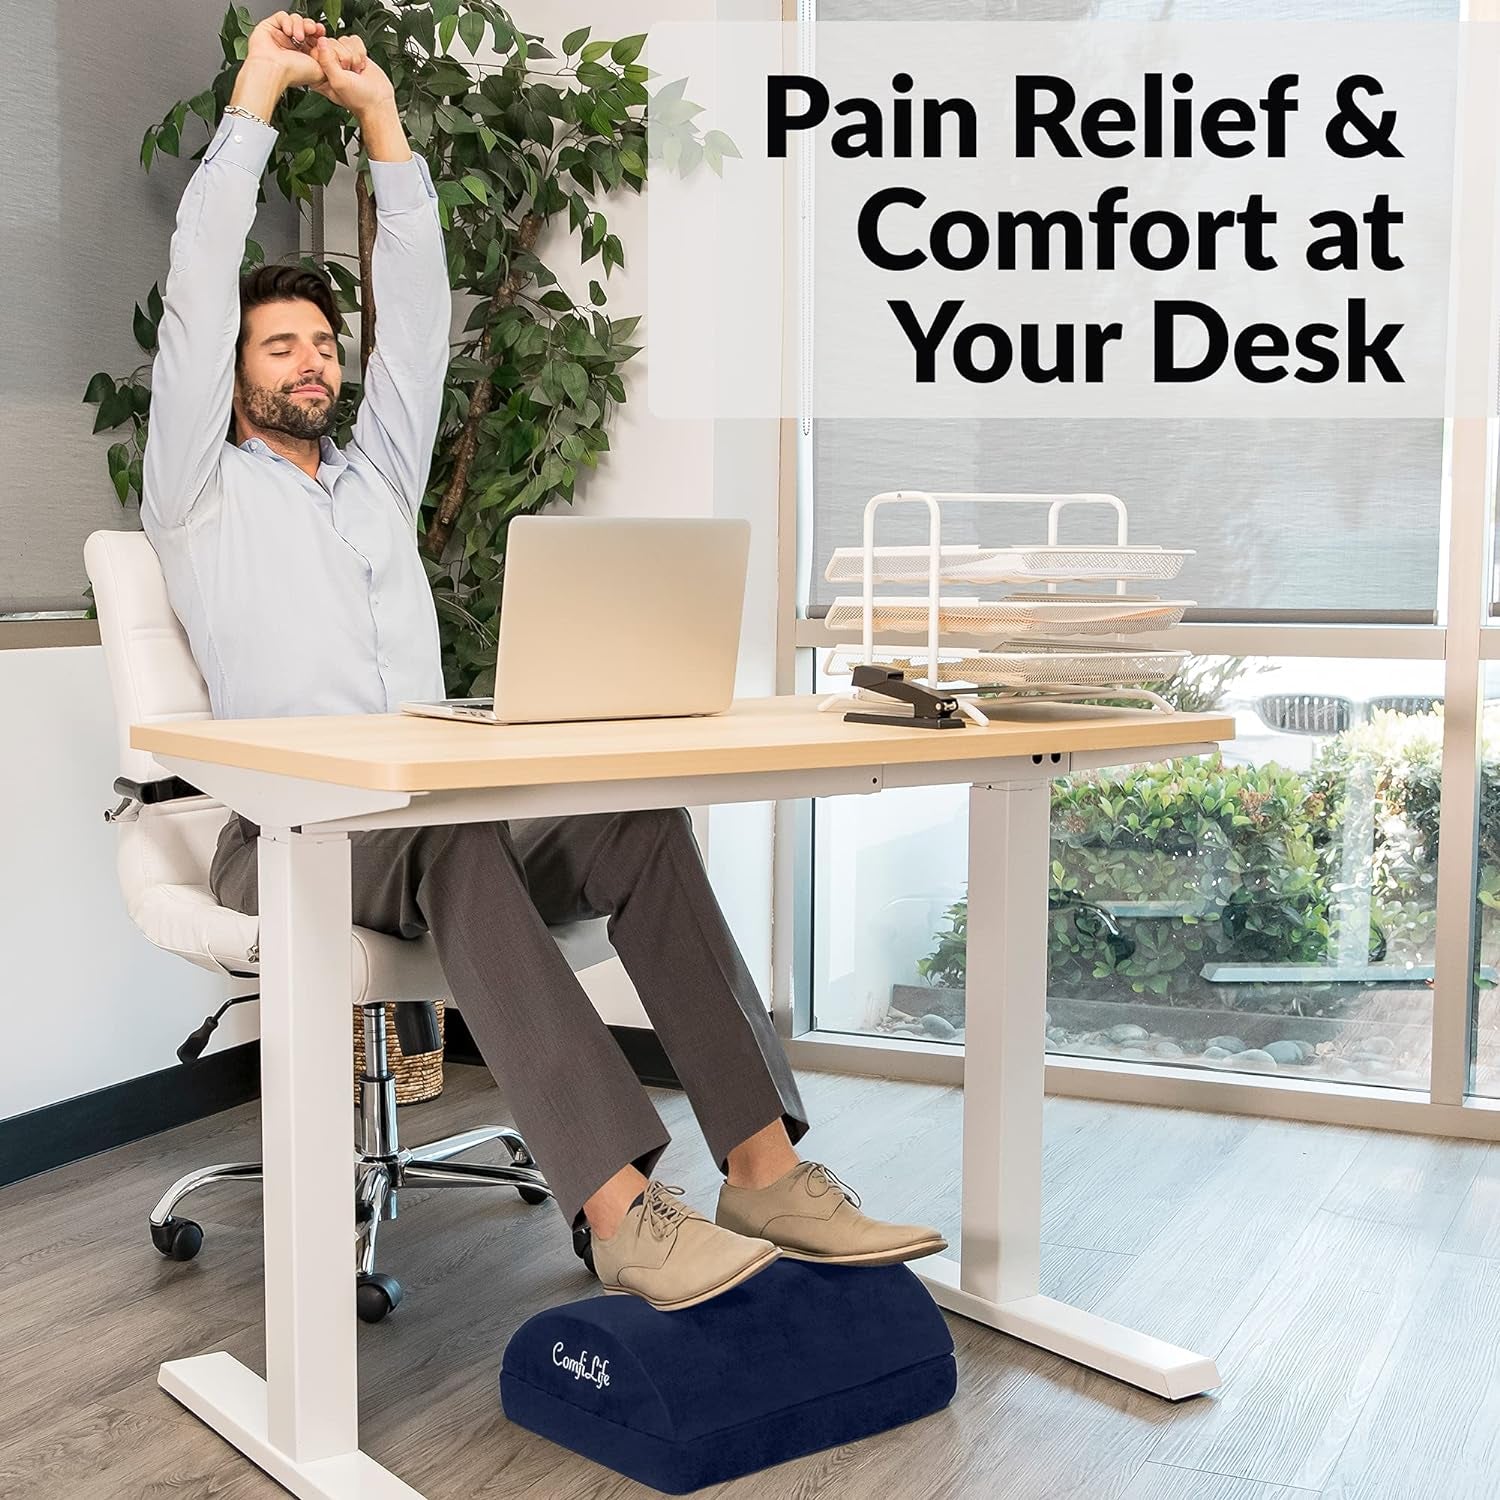 Foot Rest under Desk for Office Use – Adjustable Height Memory Foam Foot Stool under Desk for Office Chair & Gaming Chair – Ergonomic under Desk Foot Rest for Back & Hip Pain Relief (Navy)